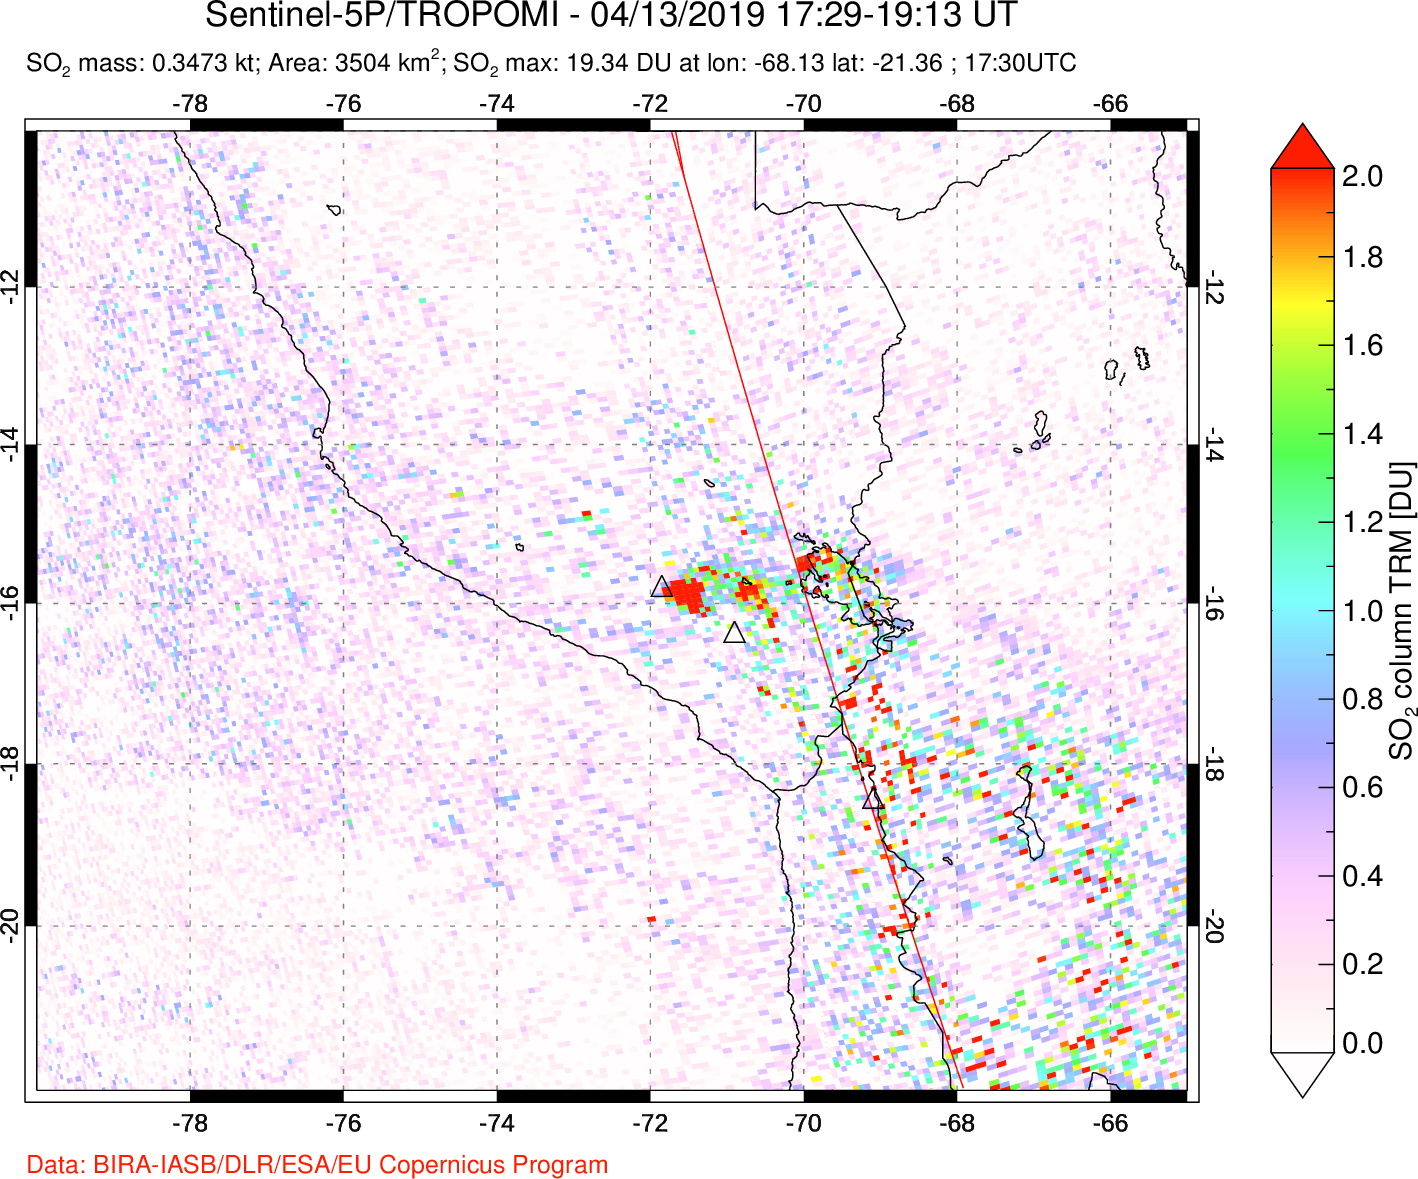 A sulfur dioxide image over Peru on Apr 13, 2019.